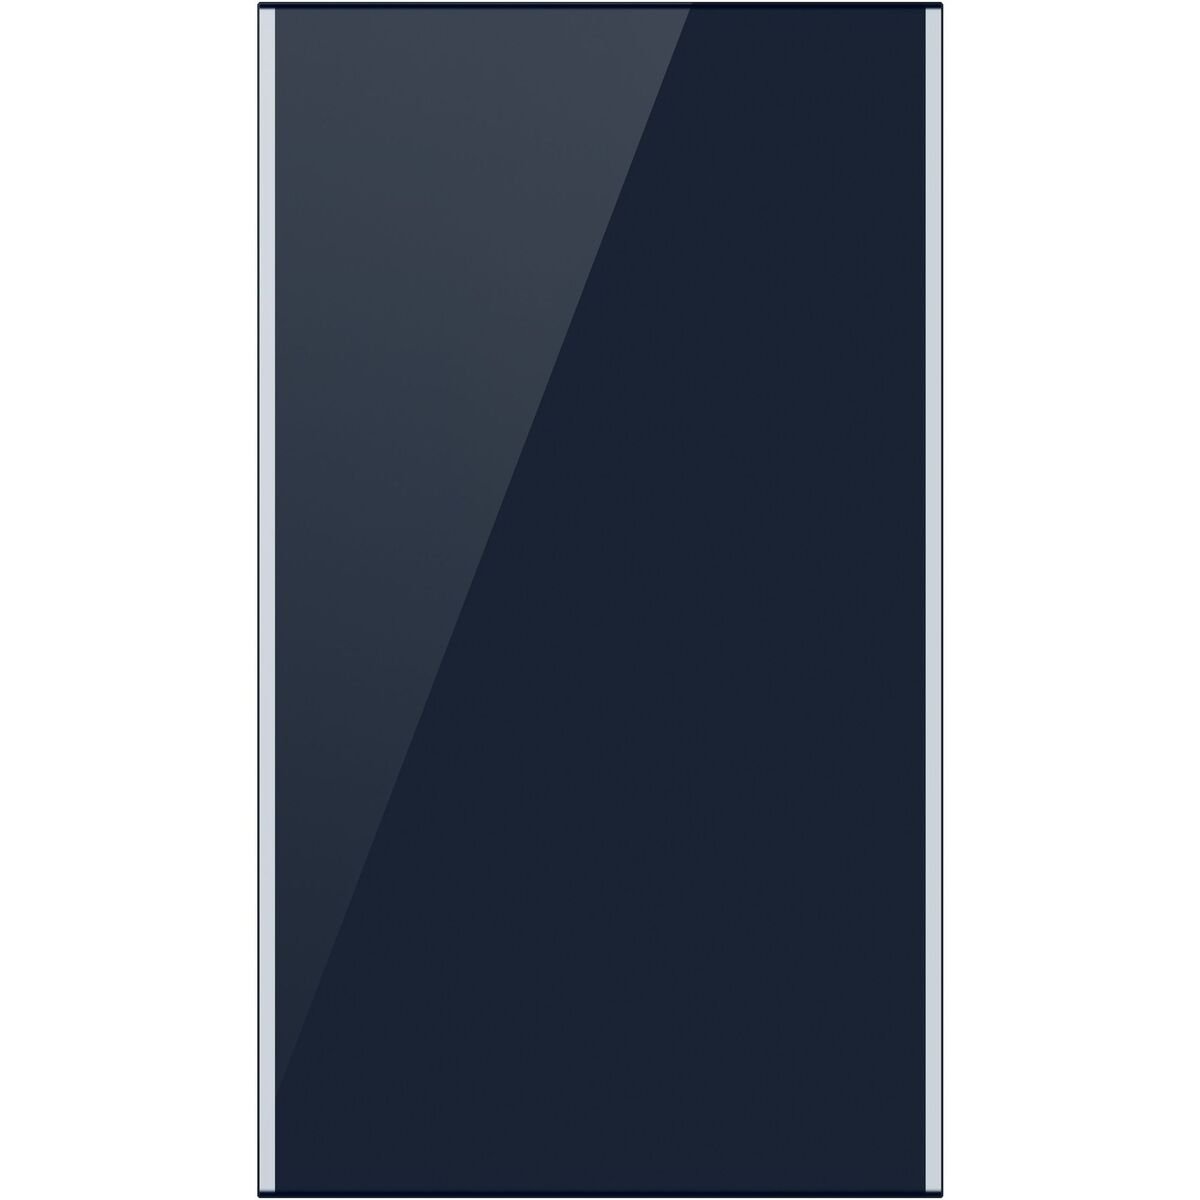 Samsung RA-F18DBB41/AE Door Bottom Panel Glam Navy Color For RF85A9111AP Bespoke French Door Refrigerator